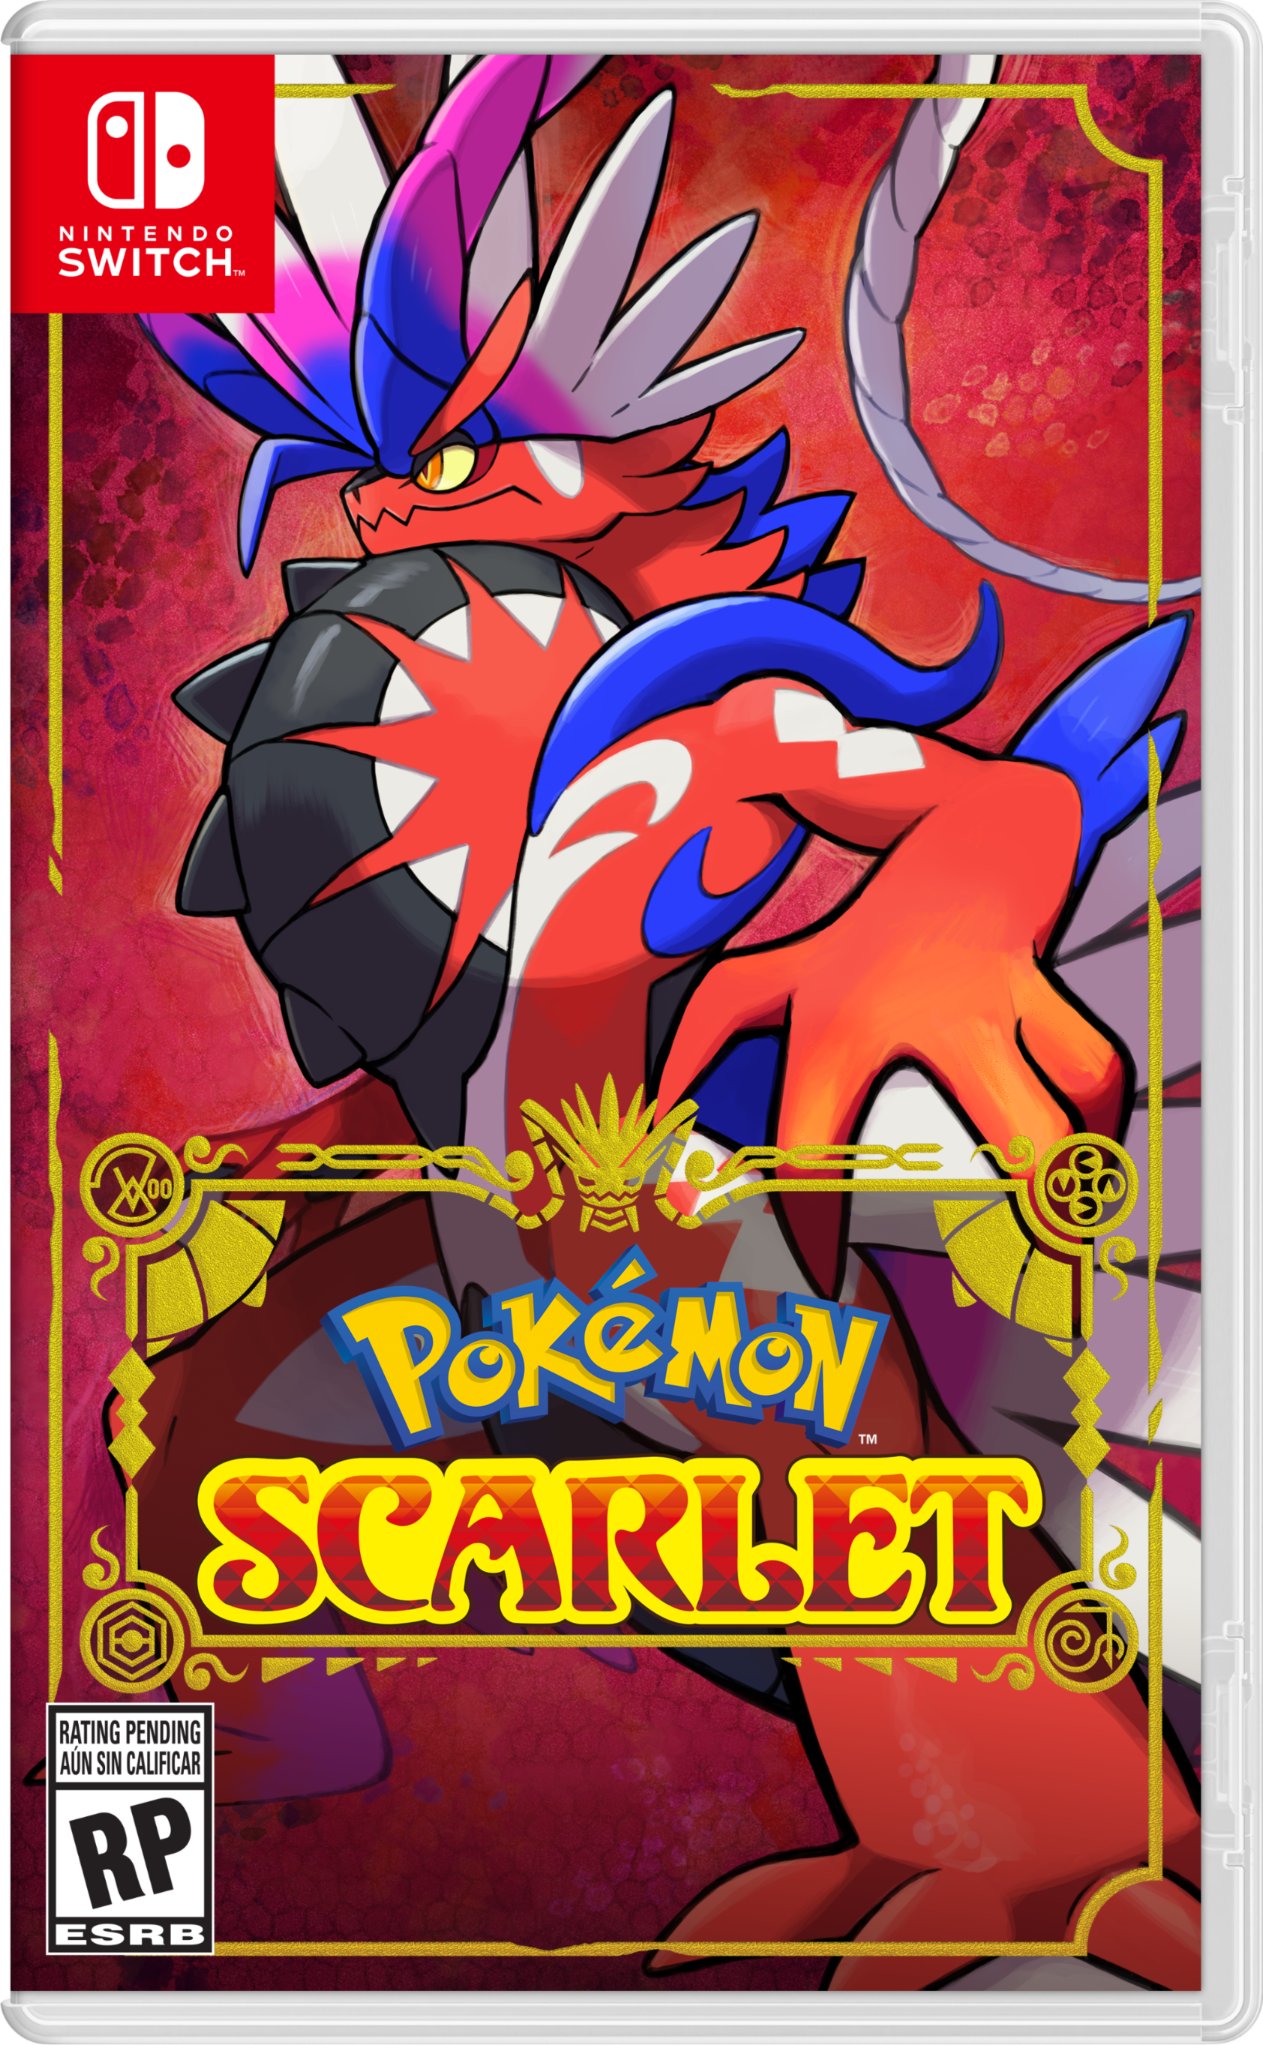 Pokémon Scarlet and Violet co-op encourages adventure and exploration -  Polygon